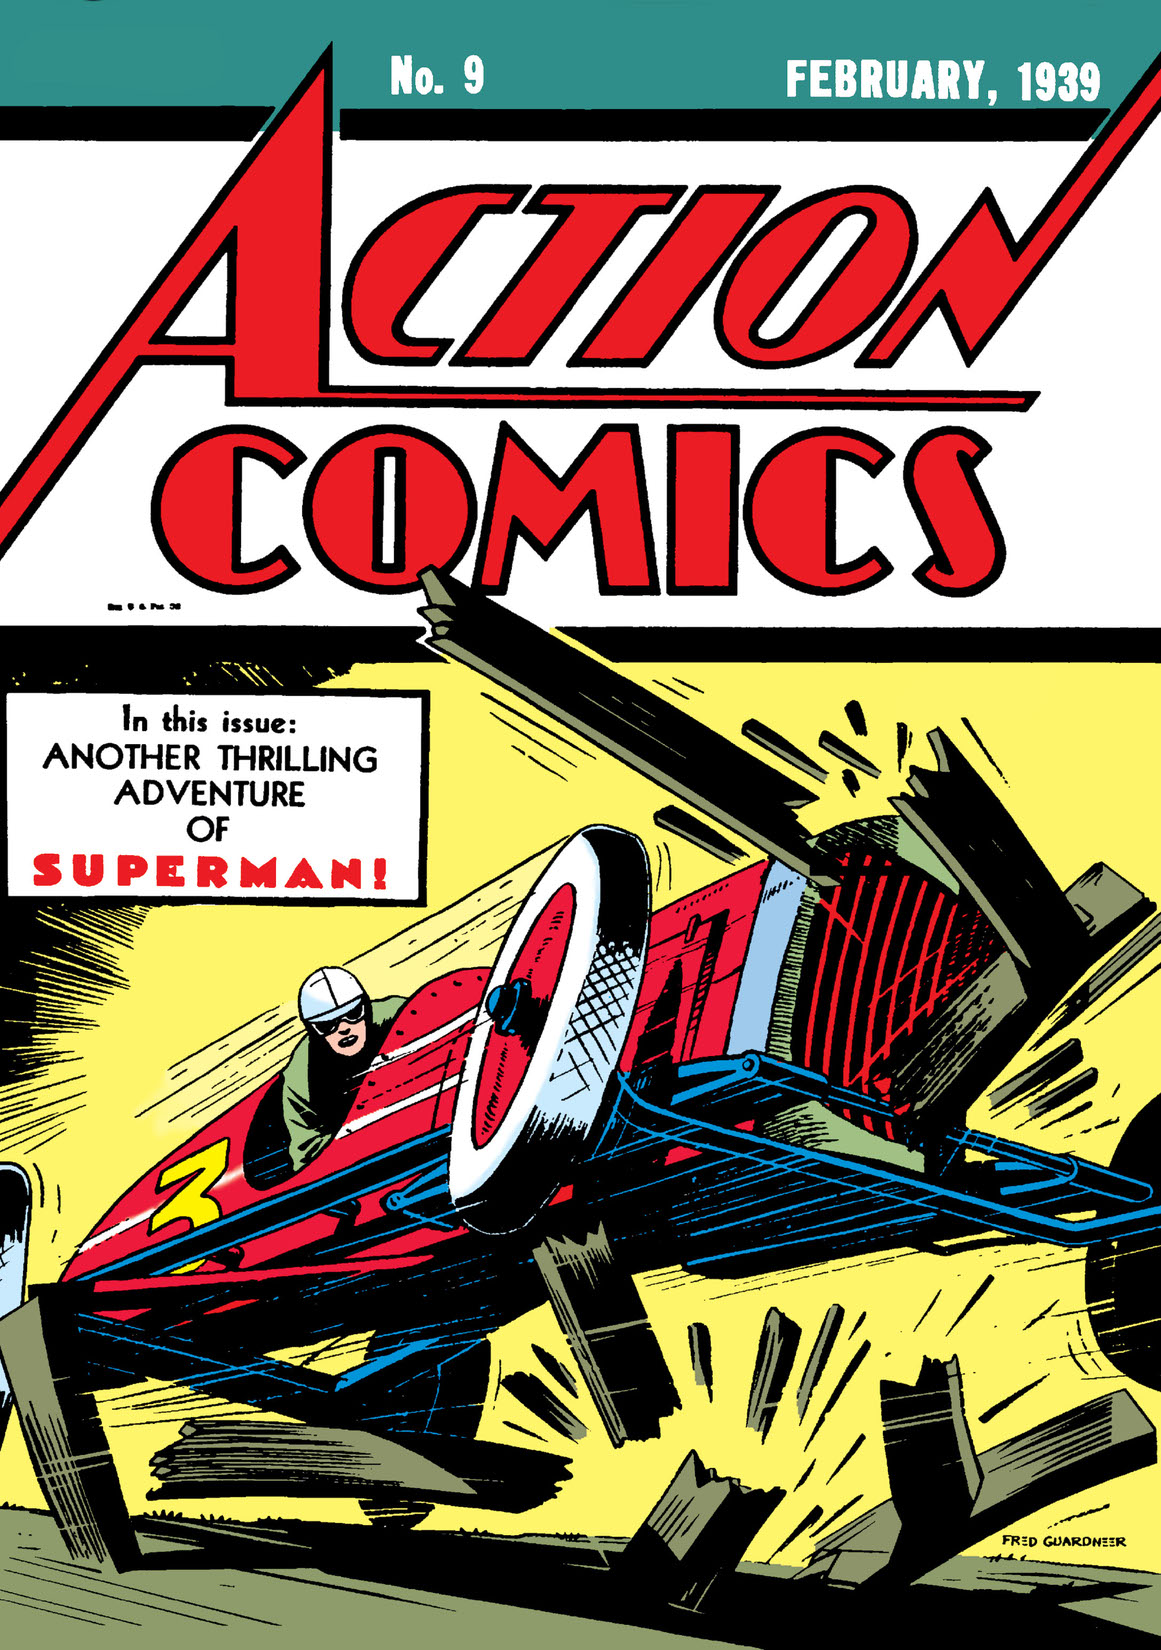 Action Comics (1938-) #9 preview images